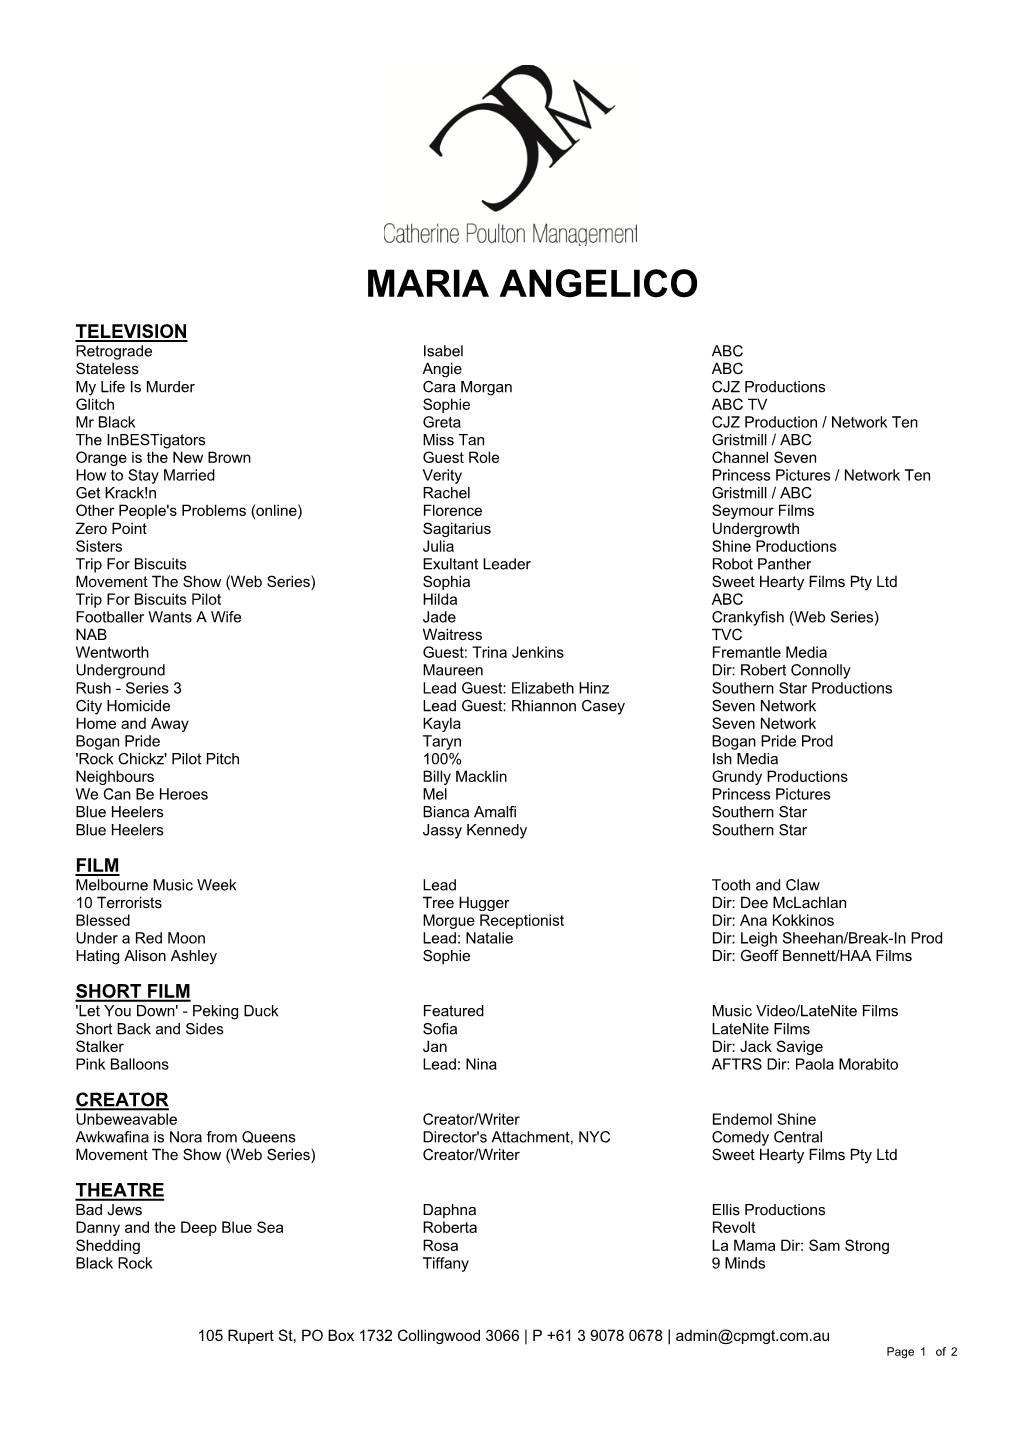 MARIA ANGELICO Theatrical Resume